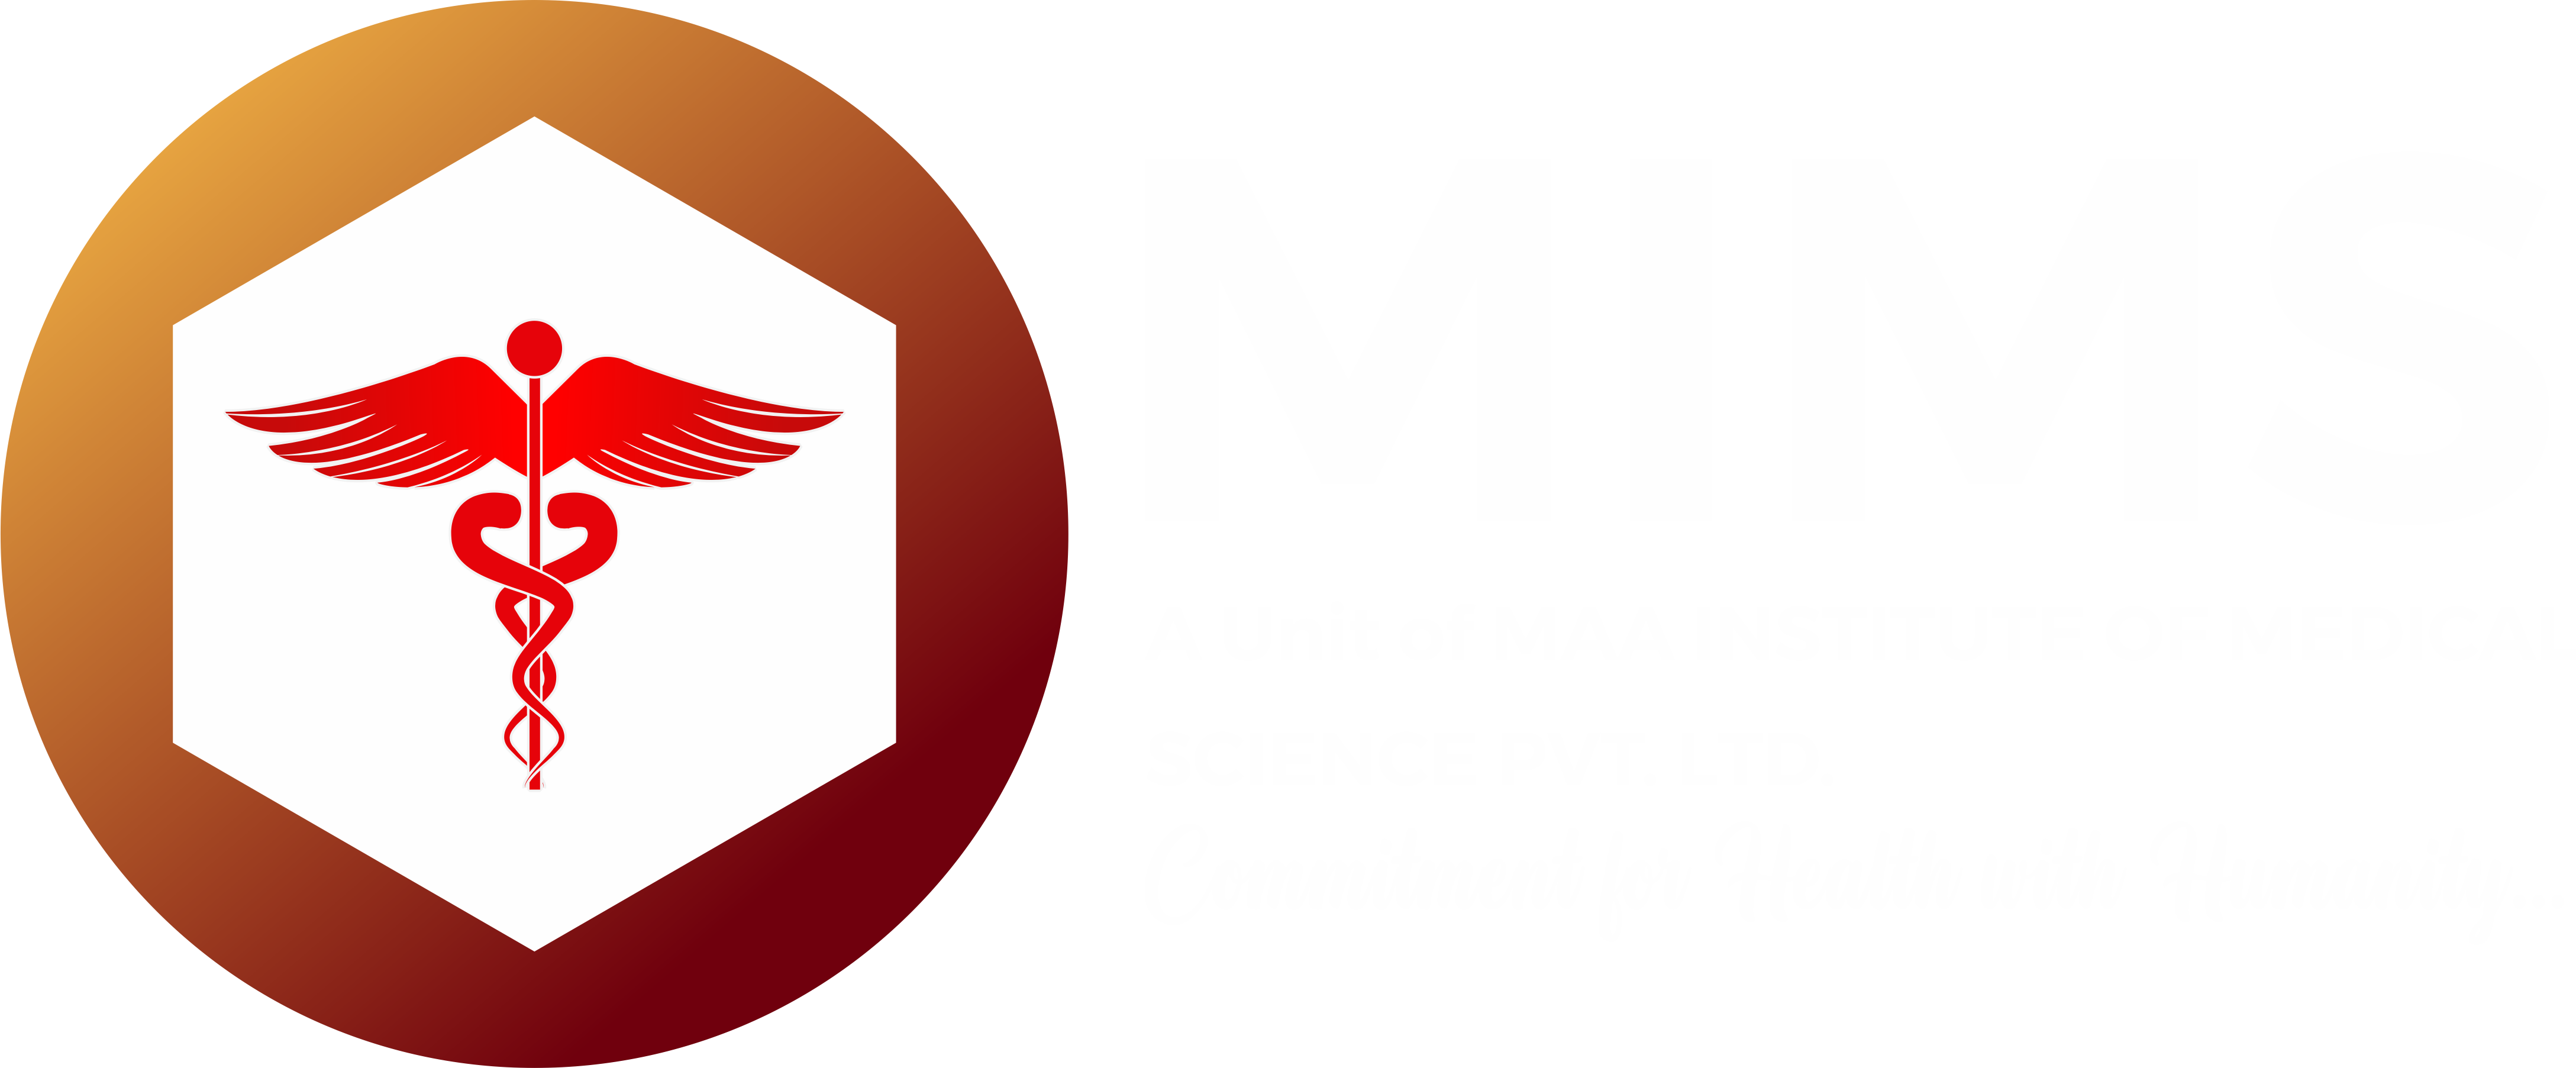 MIMS hospital Patna logo image